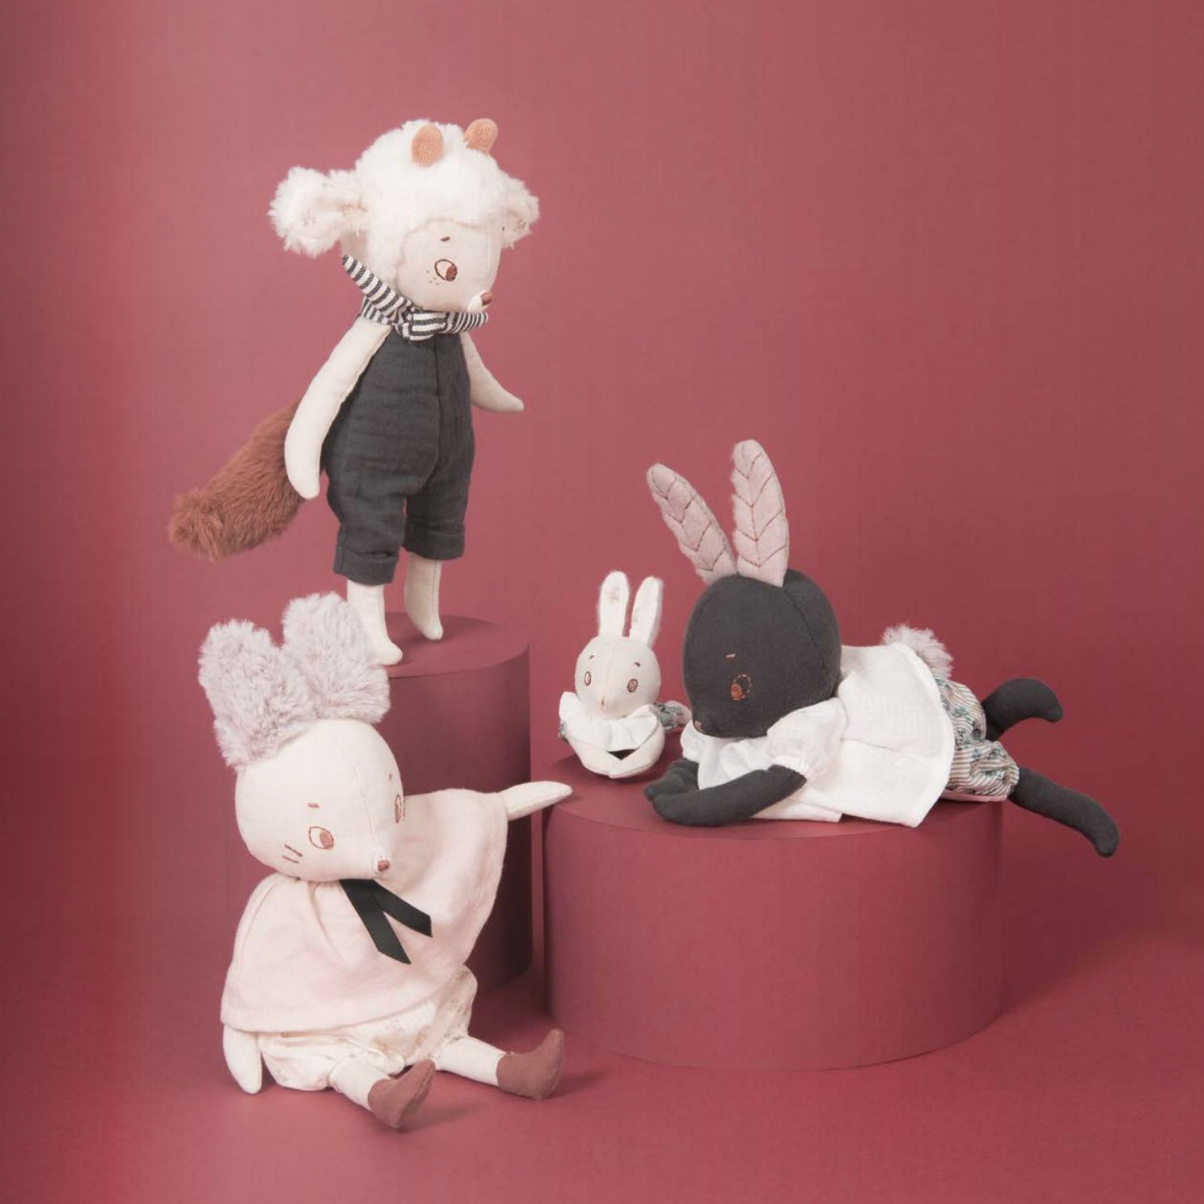 Lune The Rabbit Doll Plush Toy -Lucille Michieli